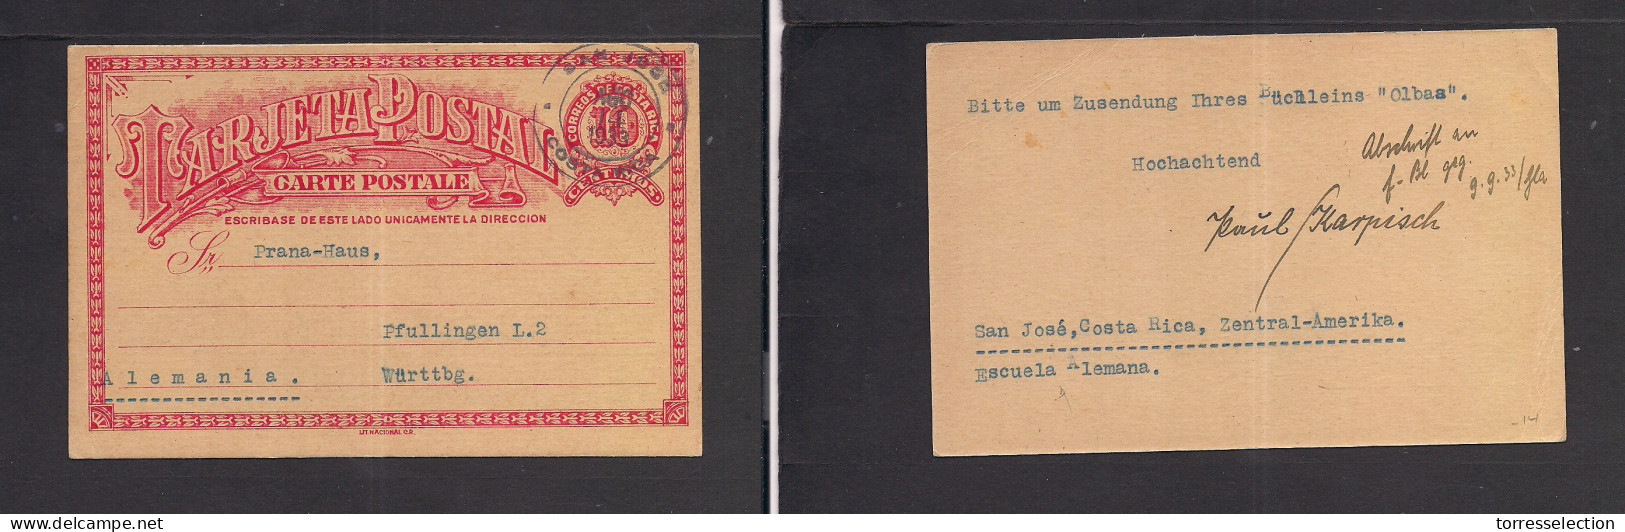 COSTA RICA. 1933 (14 Aug) San Jose - Germany, Pfullingen. 10c Red Stat Card. Fine Used. - Costa Rica